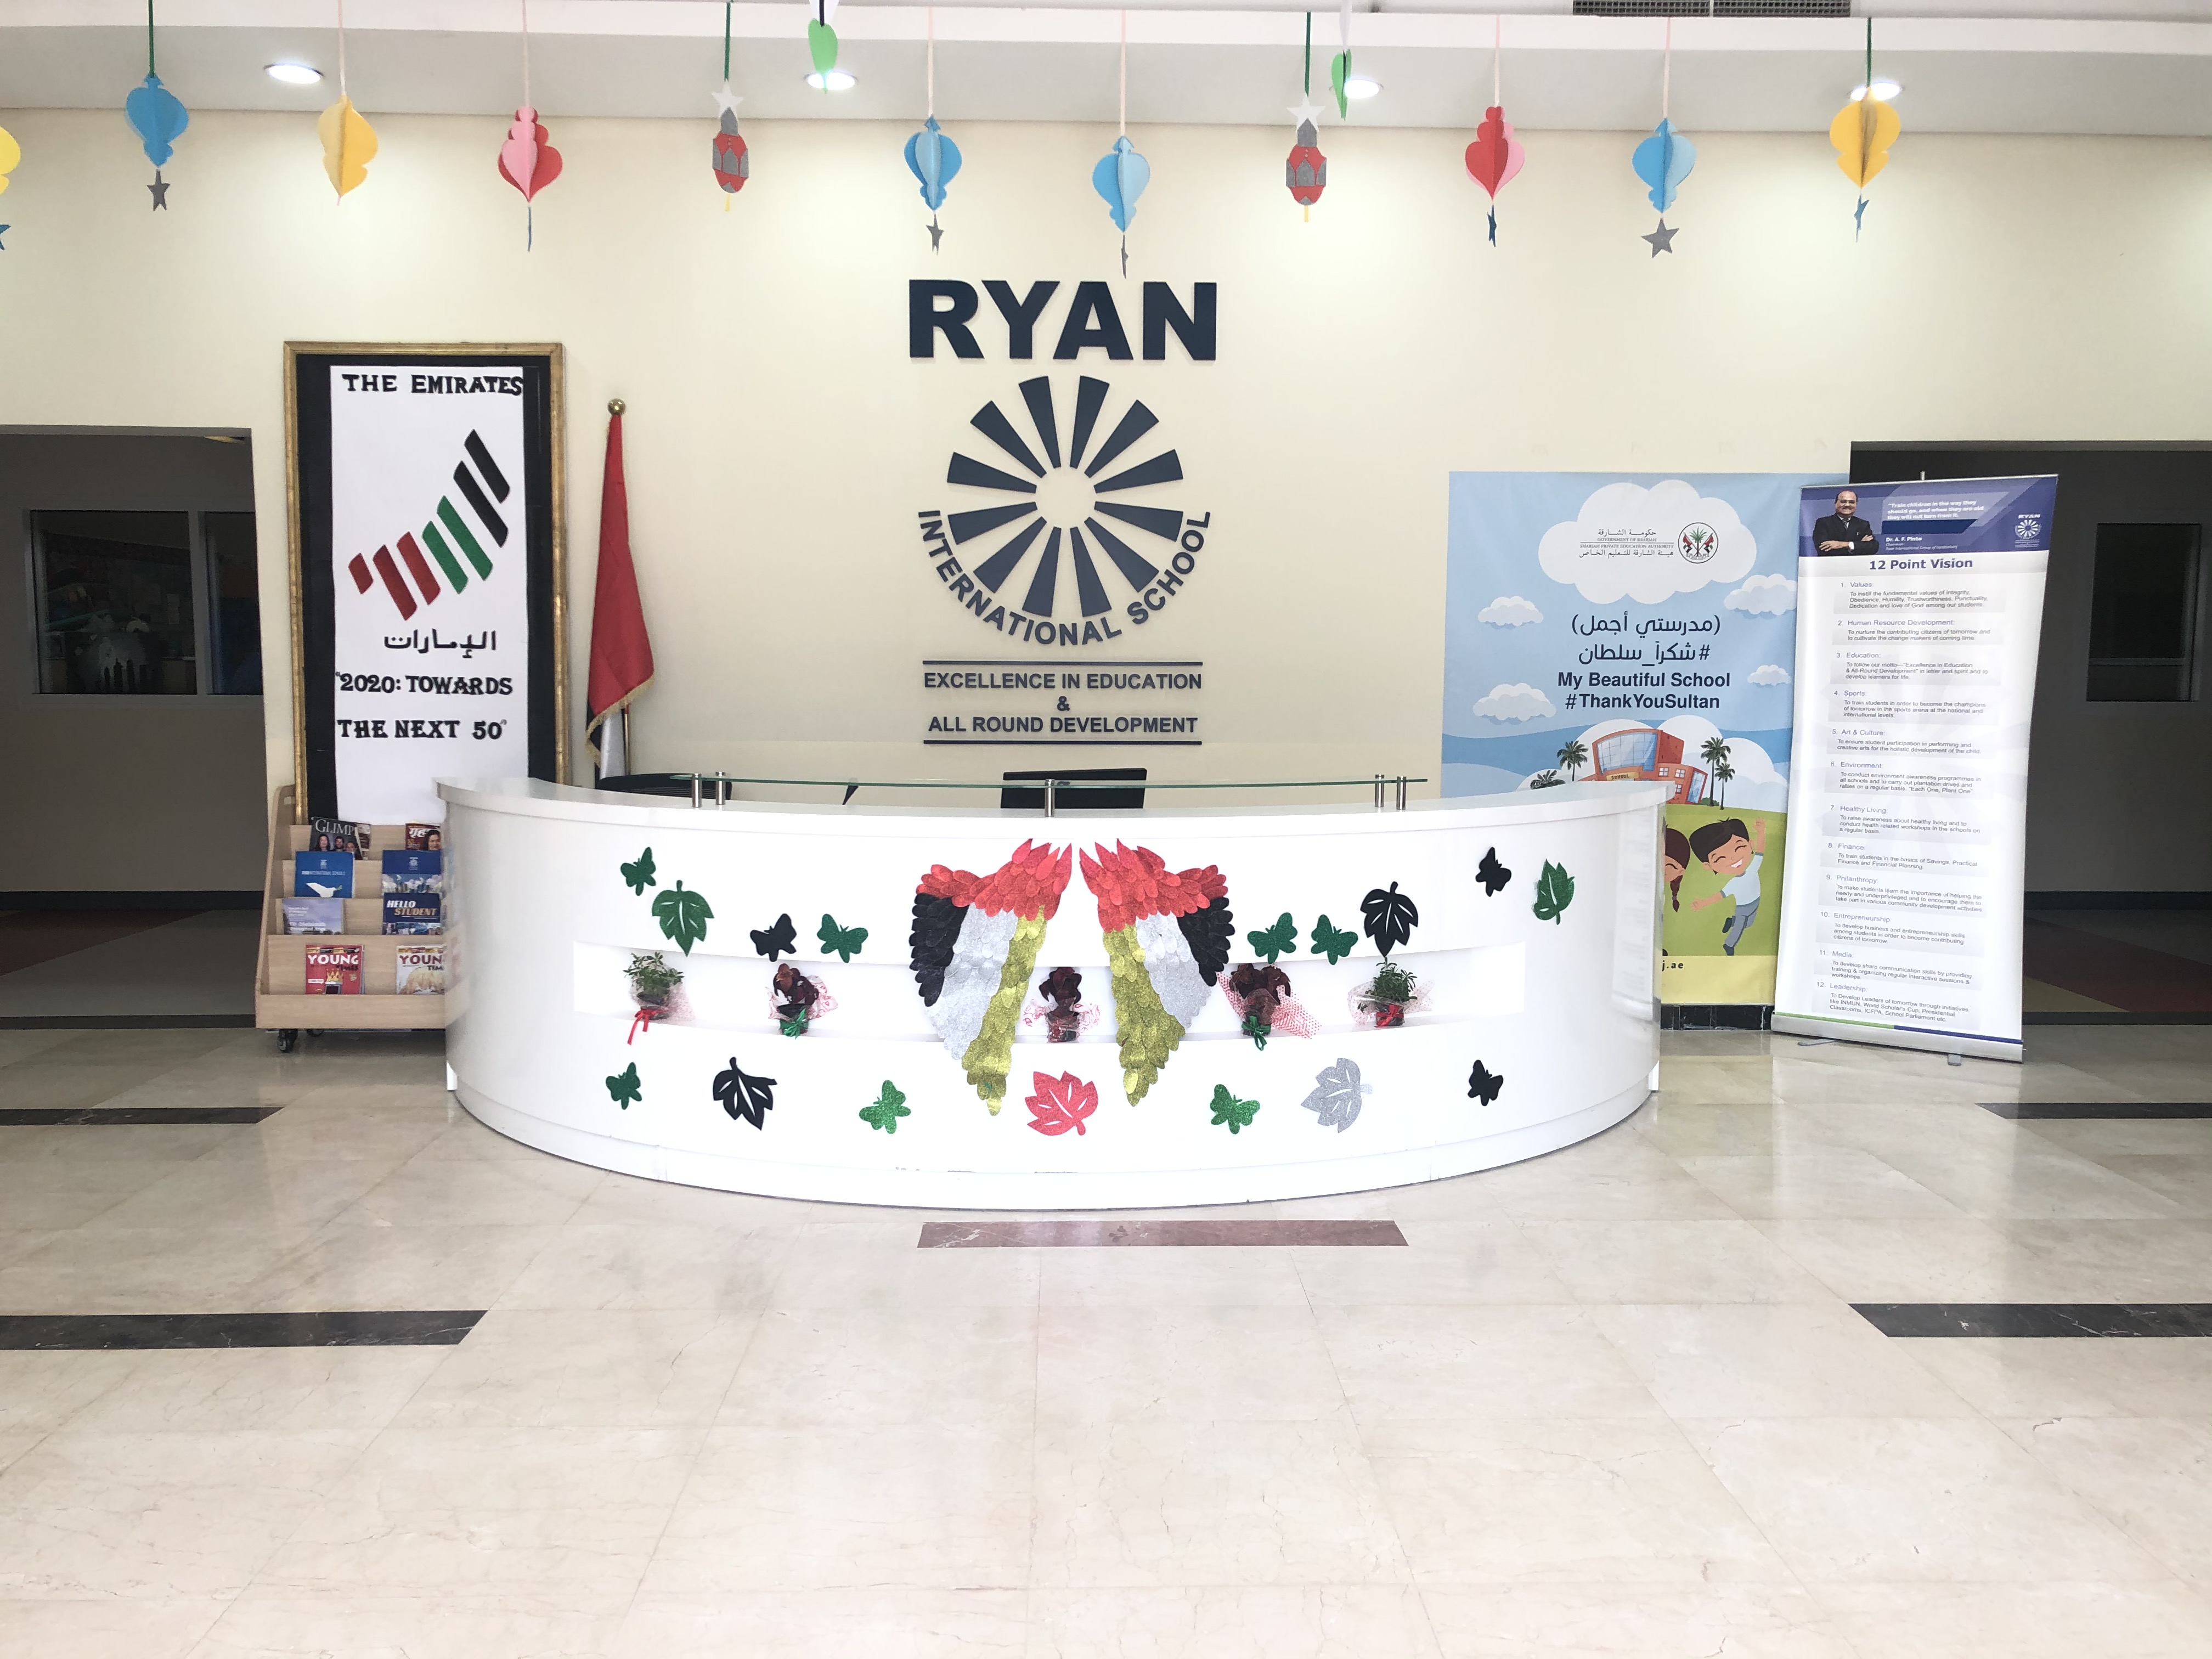 Ryan International School is one of the top 10 schools in Sharjah - Ryan International School, Sharjah